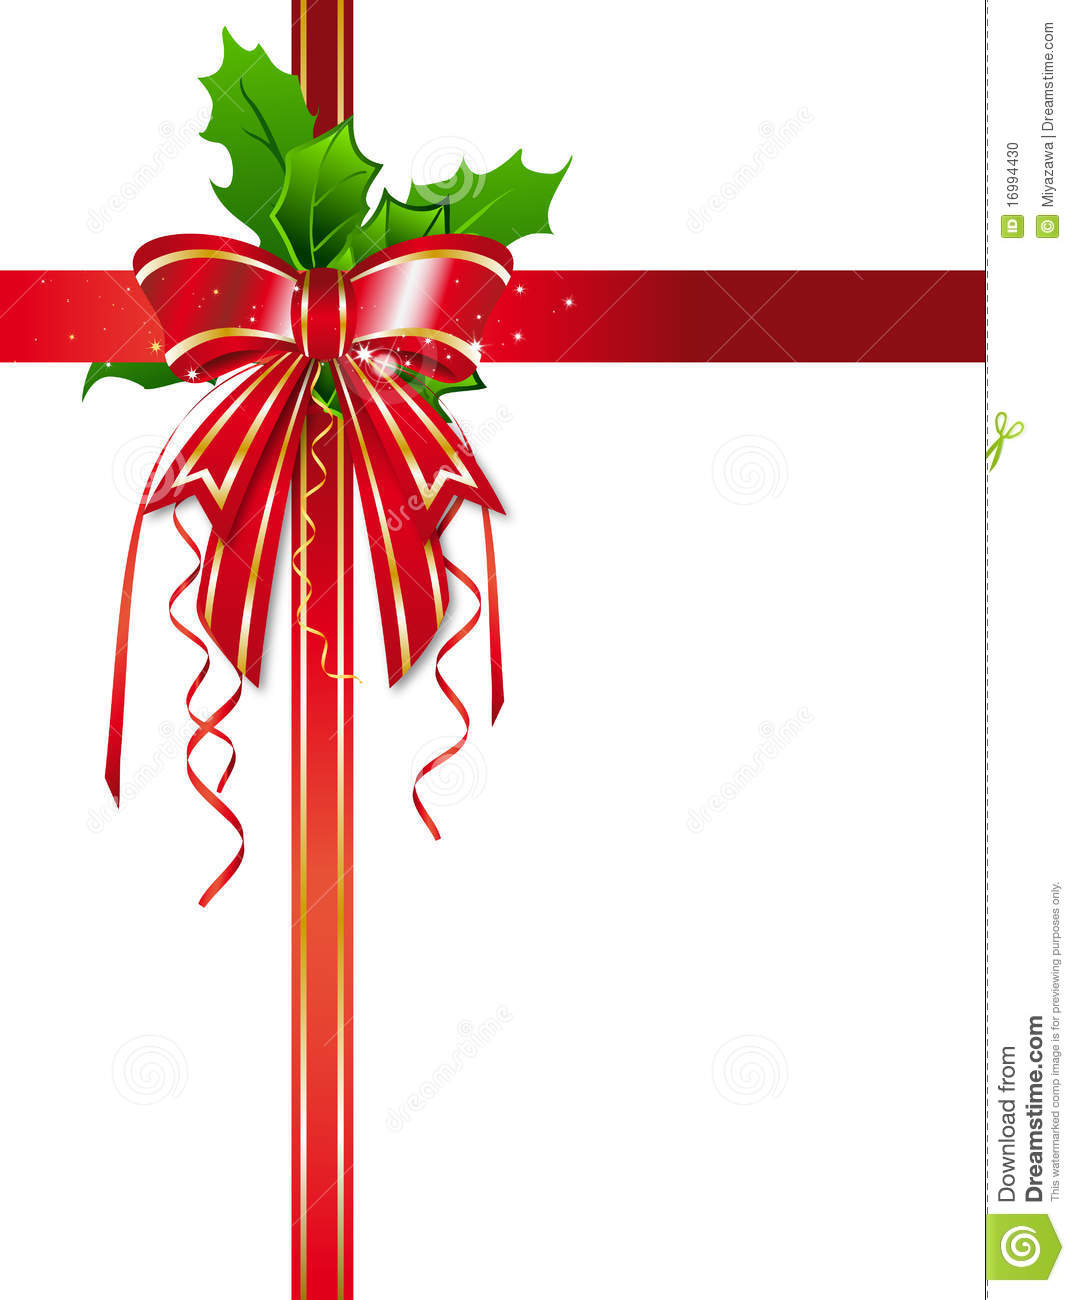 Christmas Ribbon Images Christmas Ribbon 16994430 Jpg